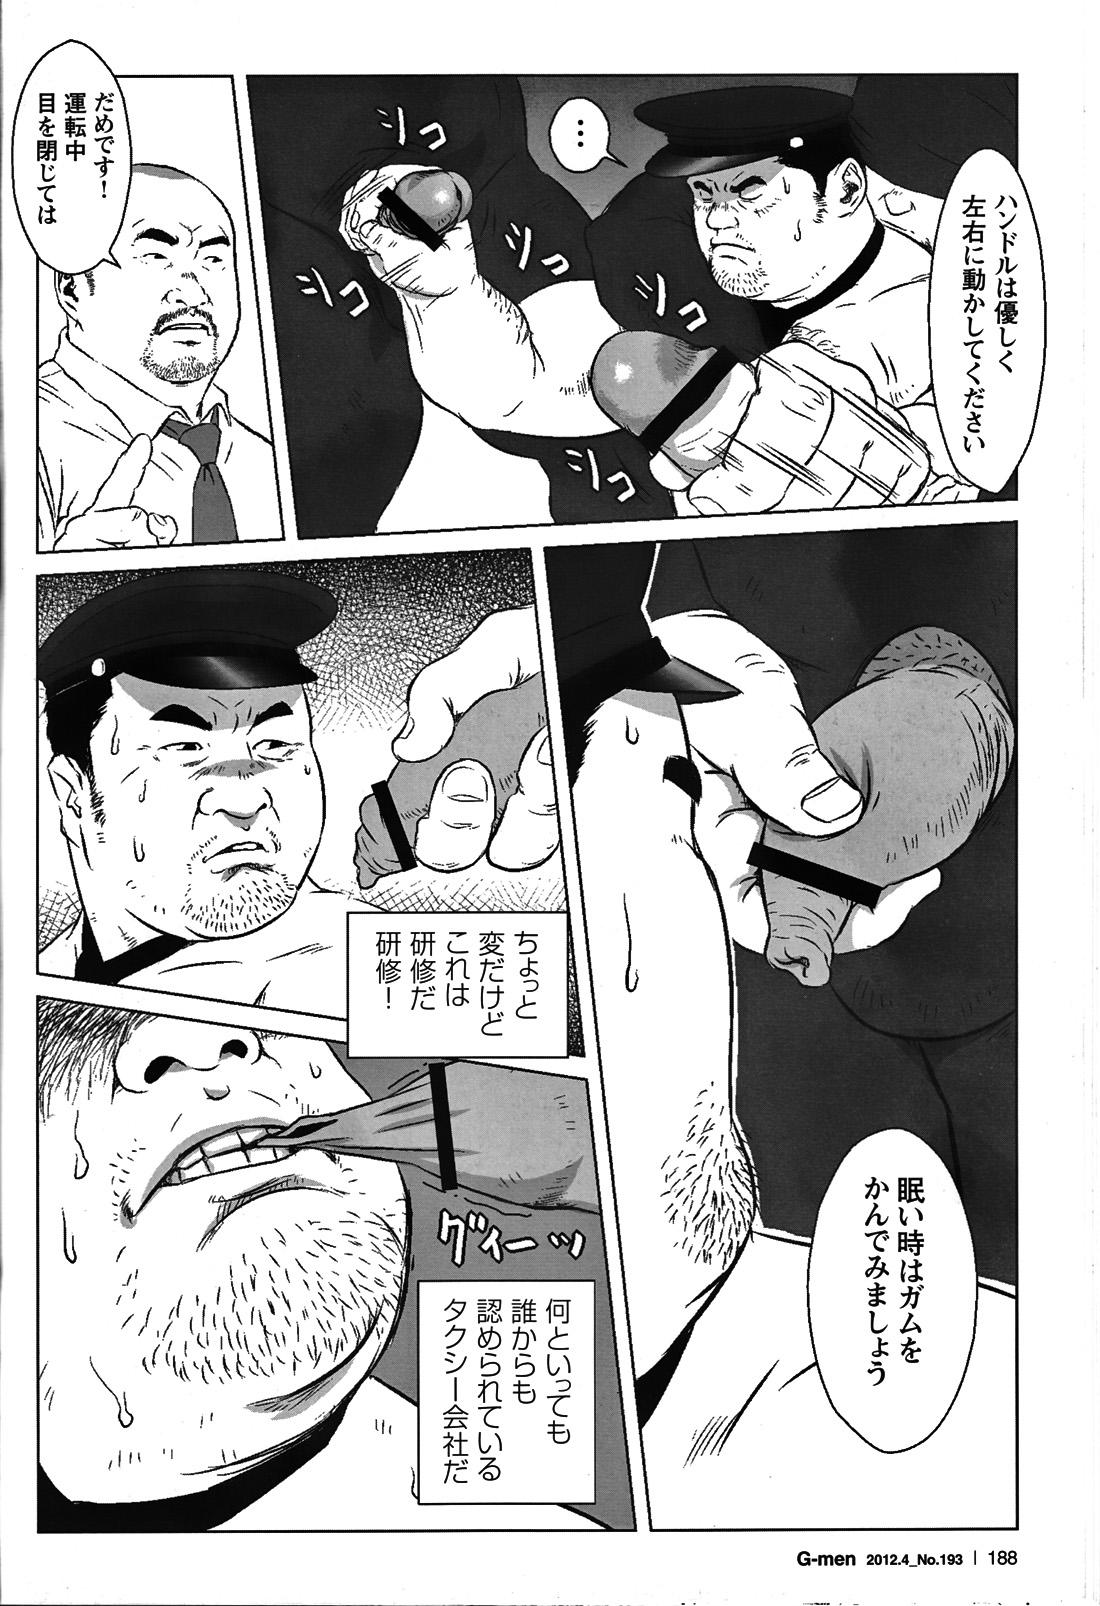 Comic G-men Gaho No.05 172